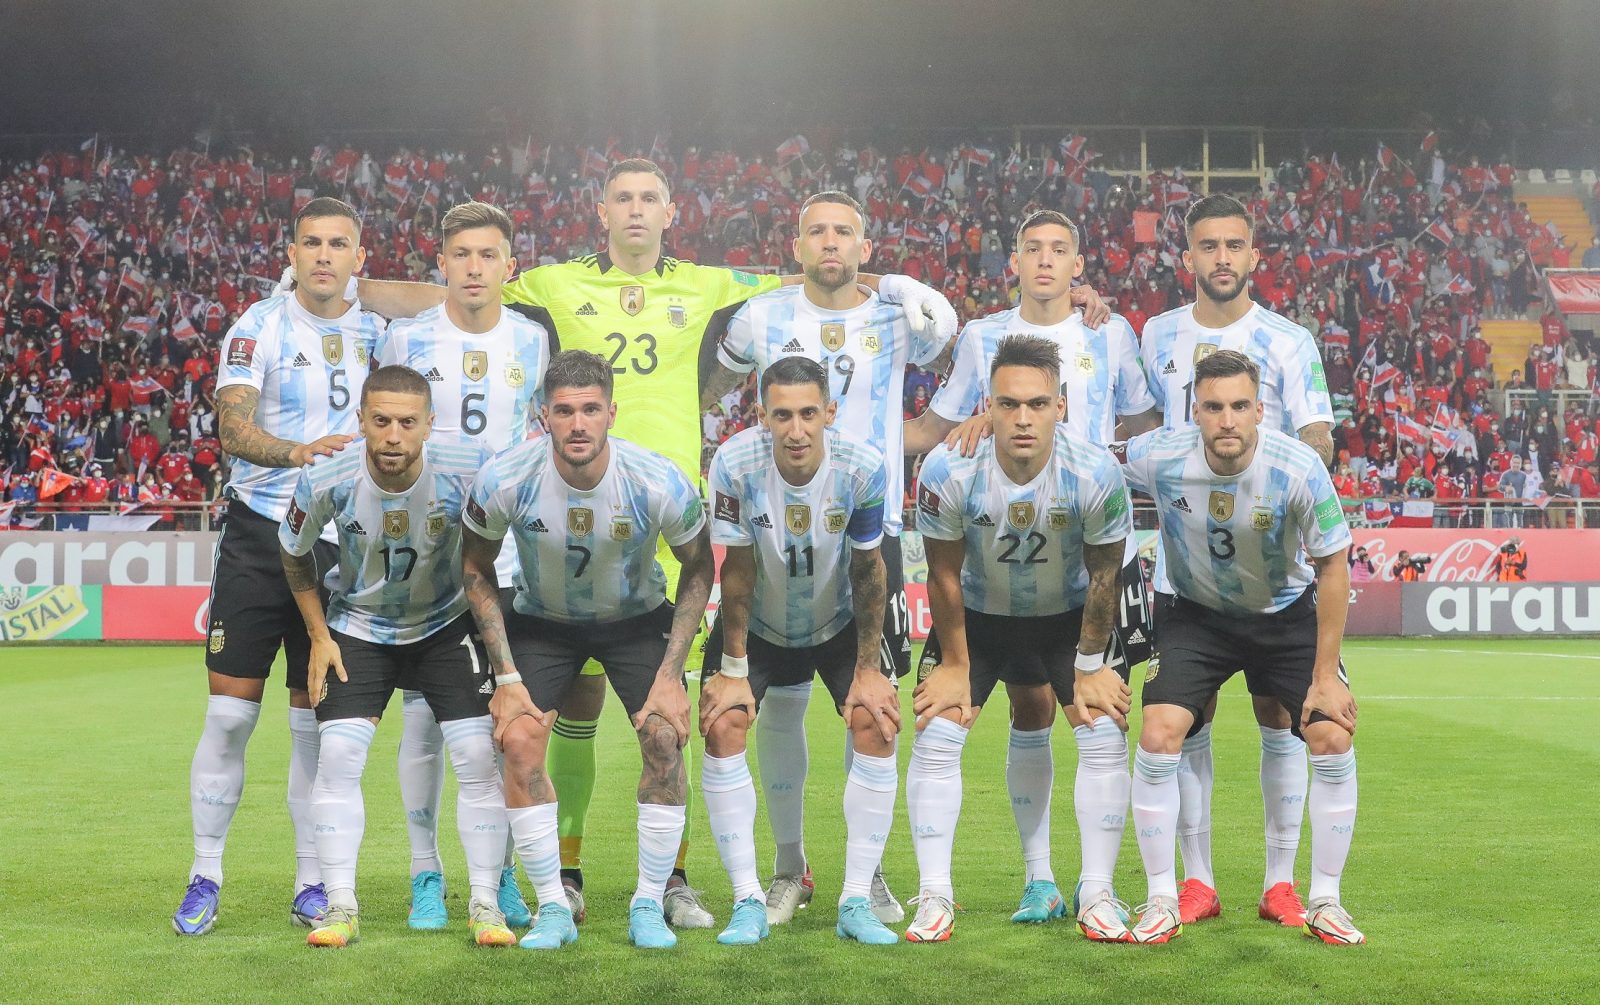 Argentina's final squad